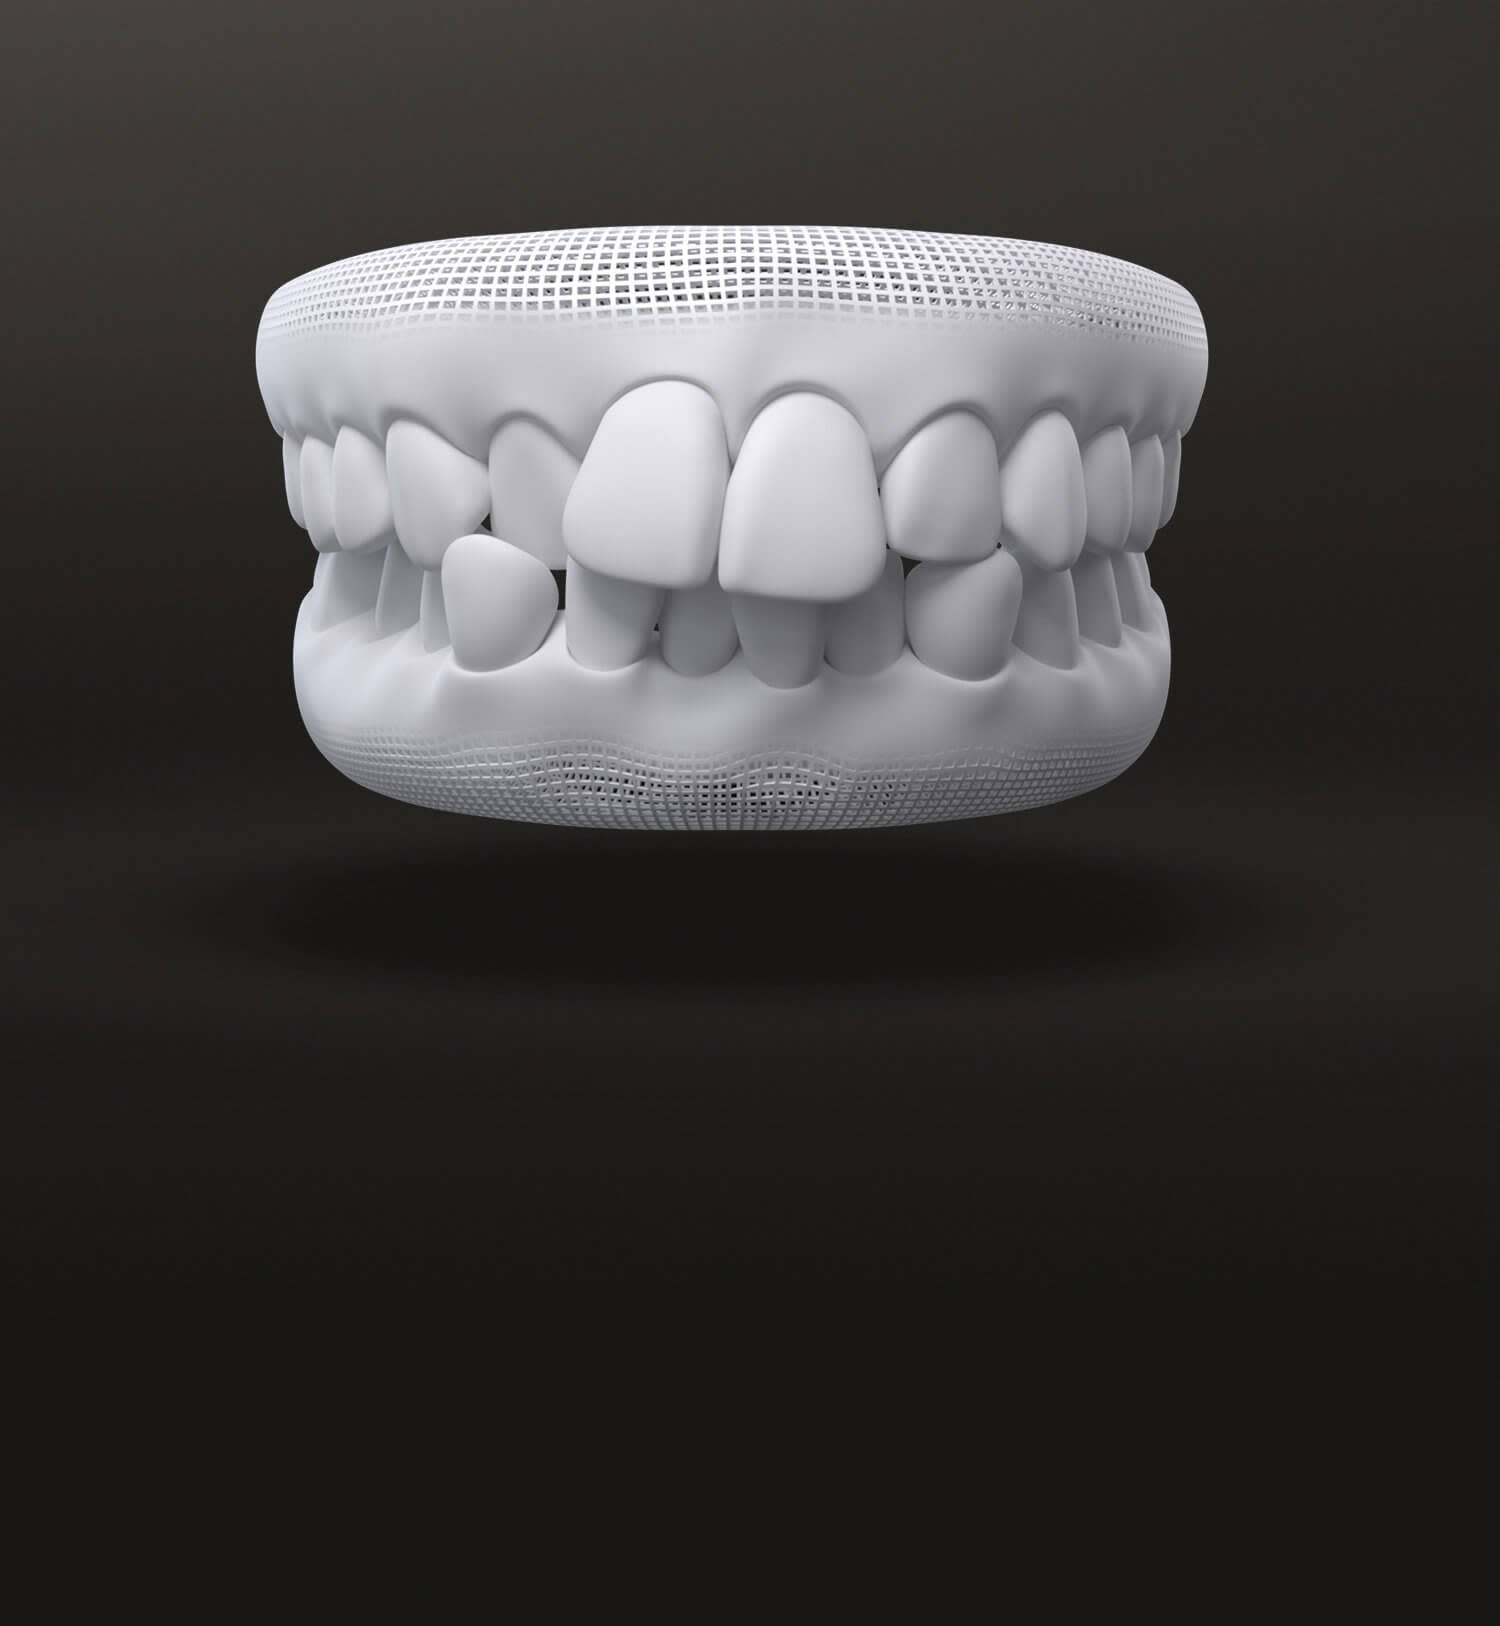 Crowded teeth model 3d - Invisalign treatments Europe